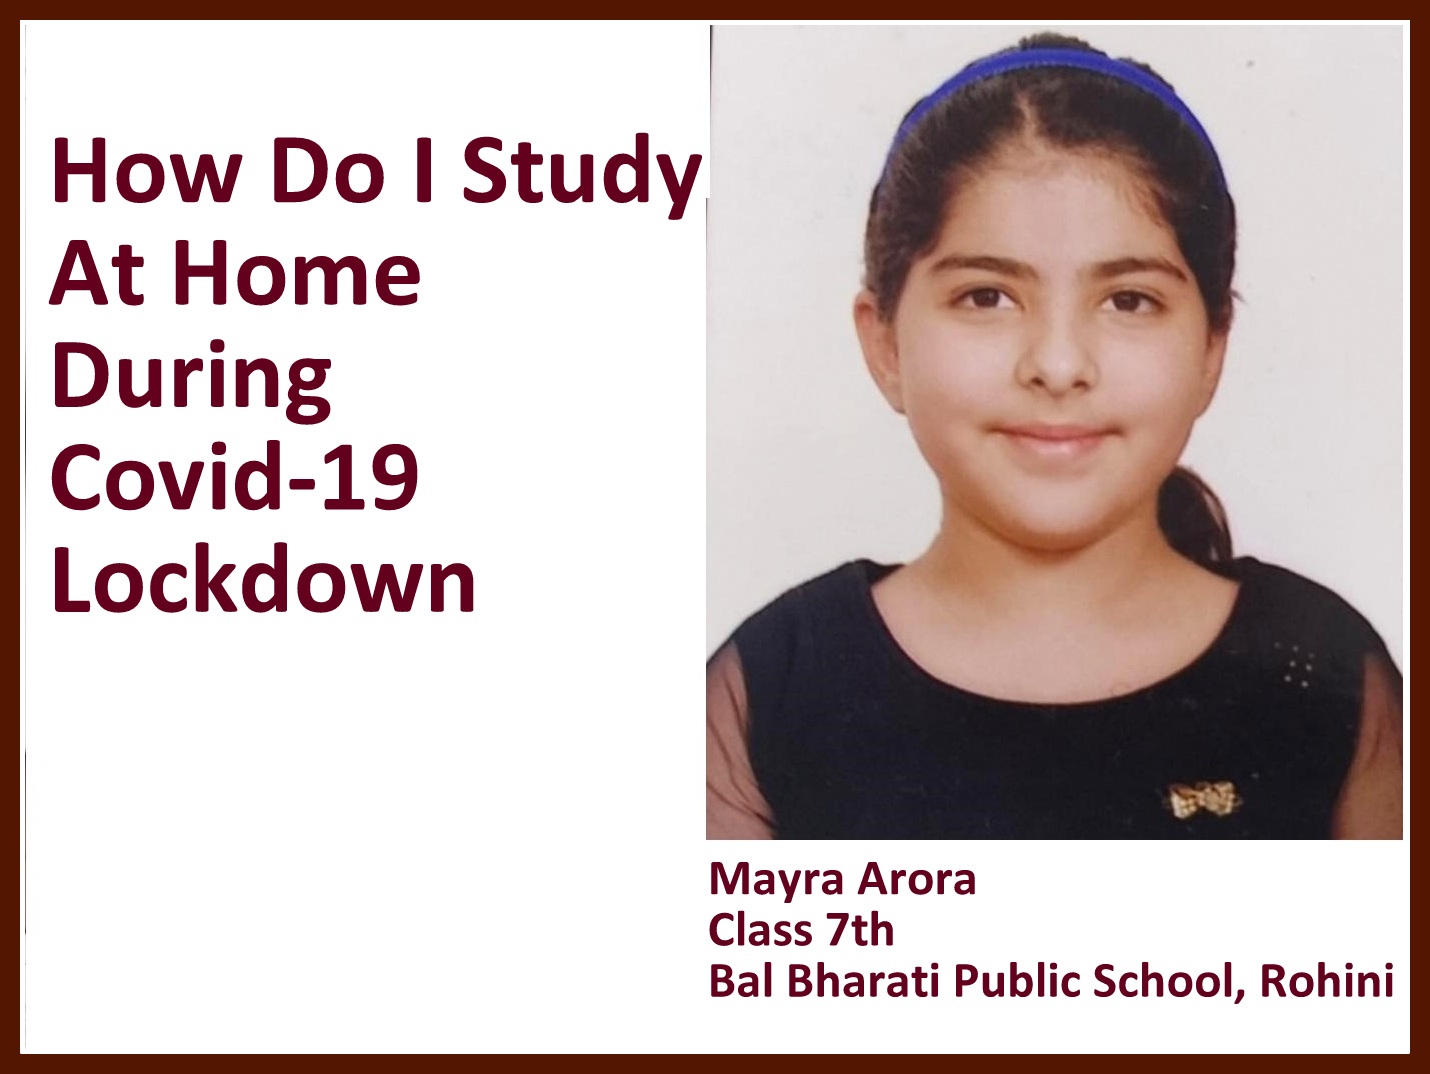 How Do I Study At Home During Covid-19 Lockdown - Mayra Arora